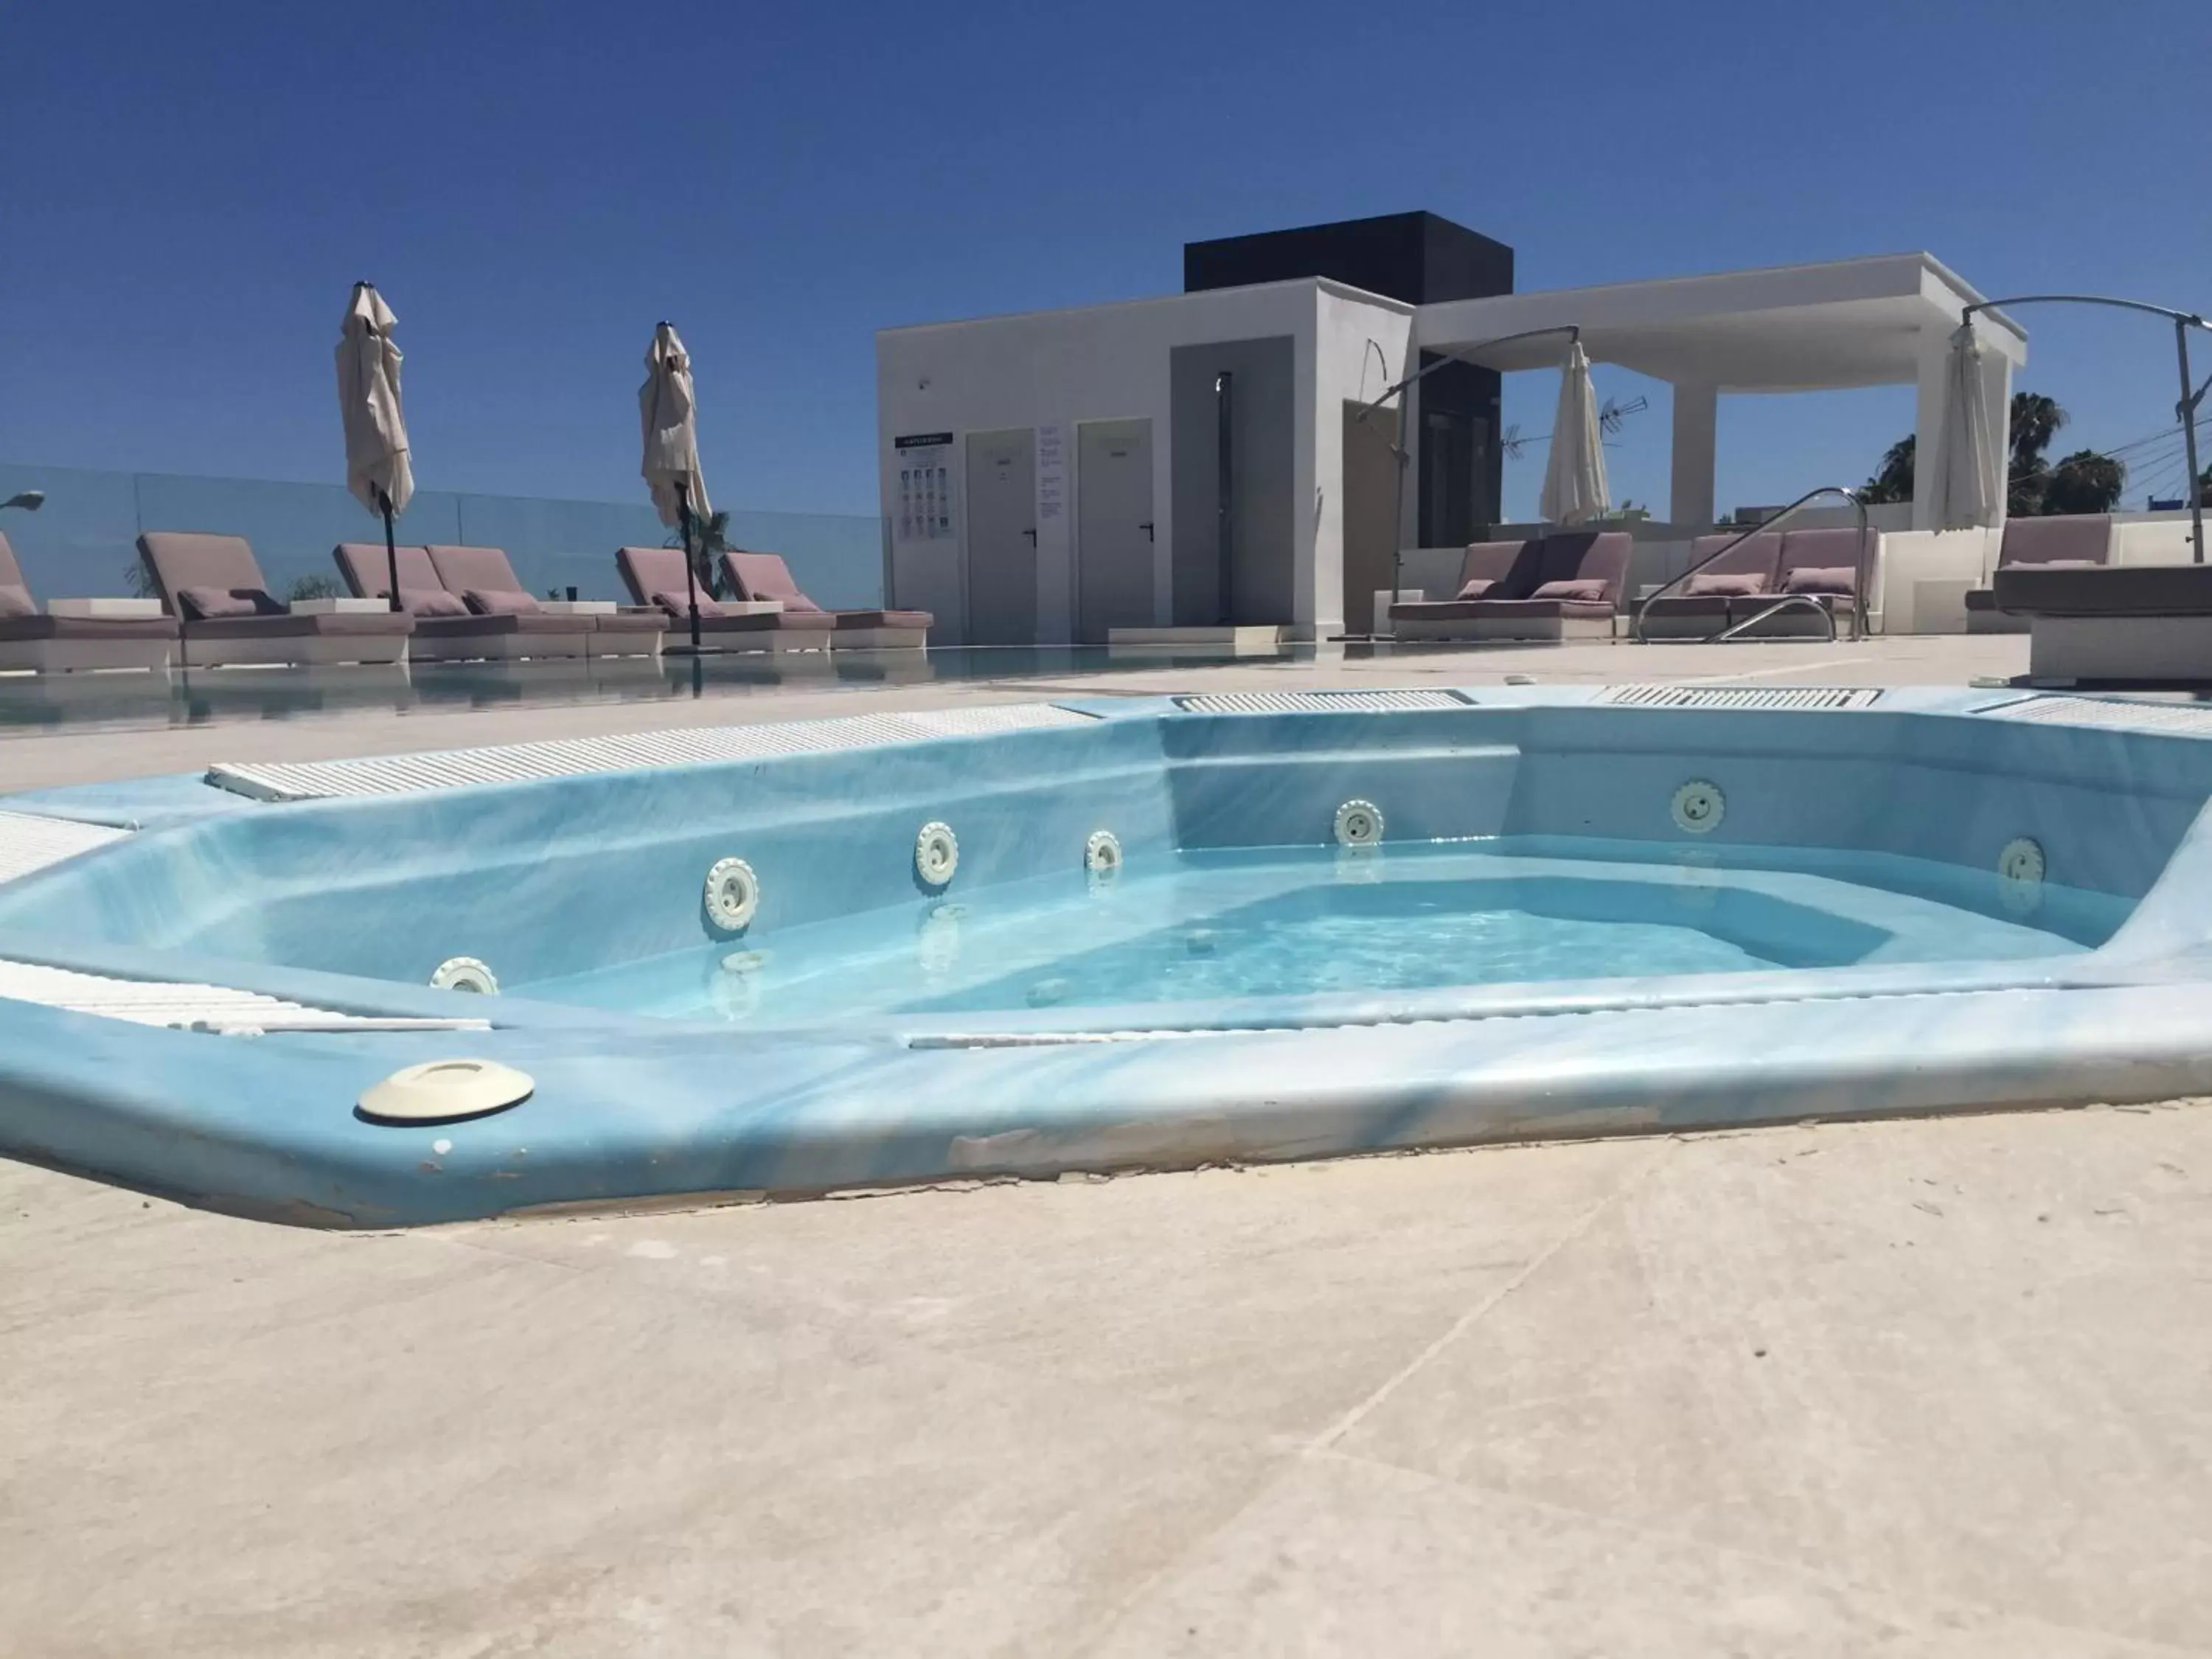 Day, Swimming Pool in Hotel Natursun